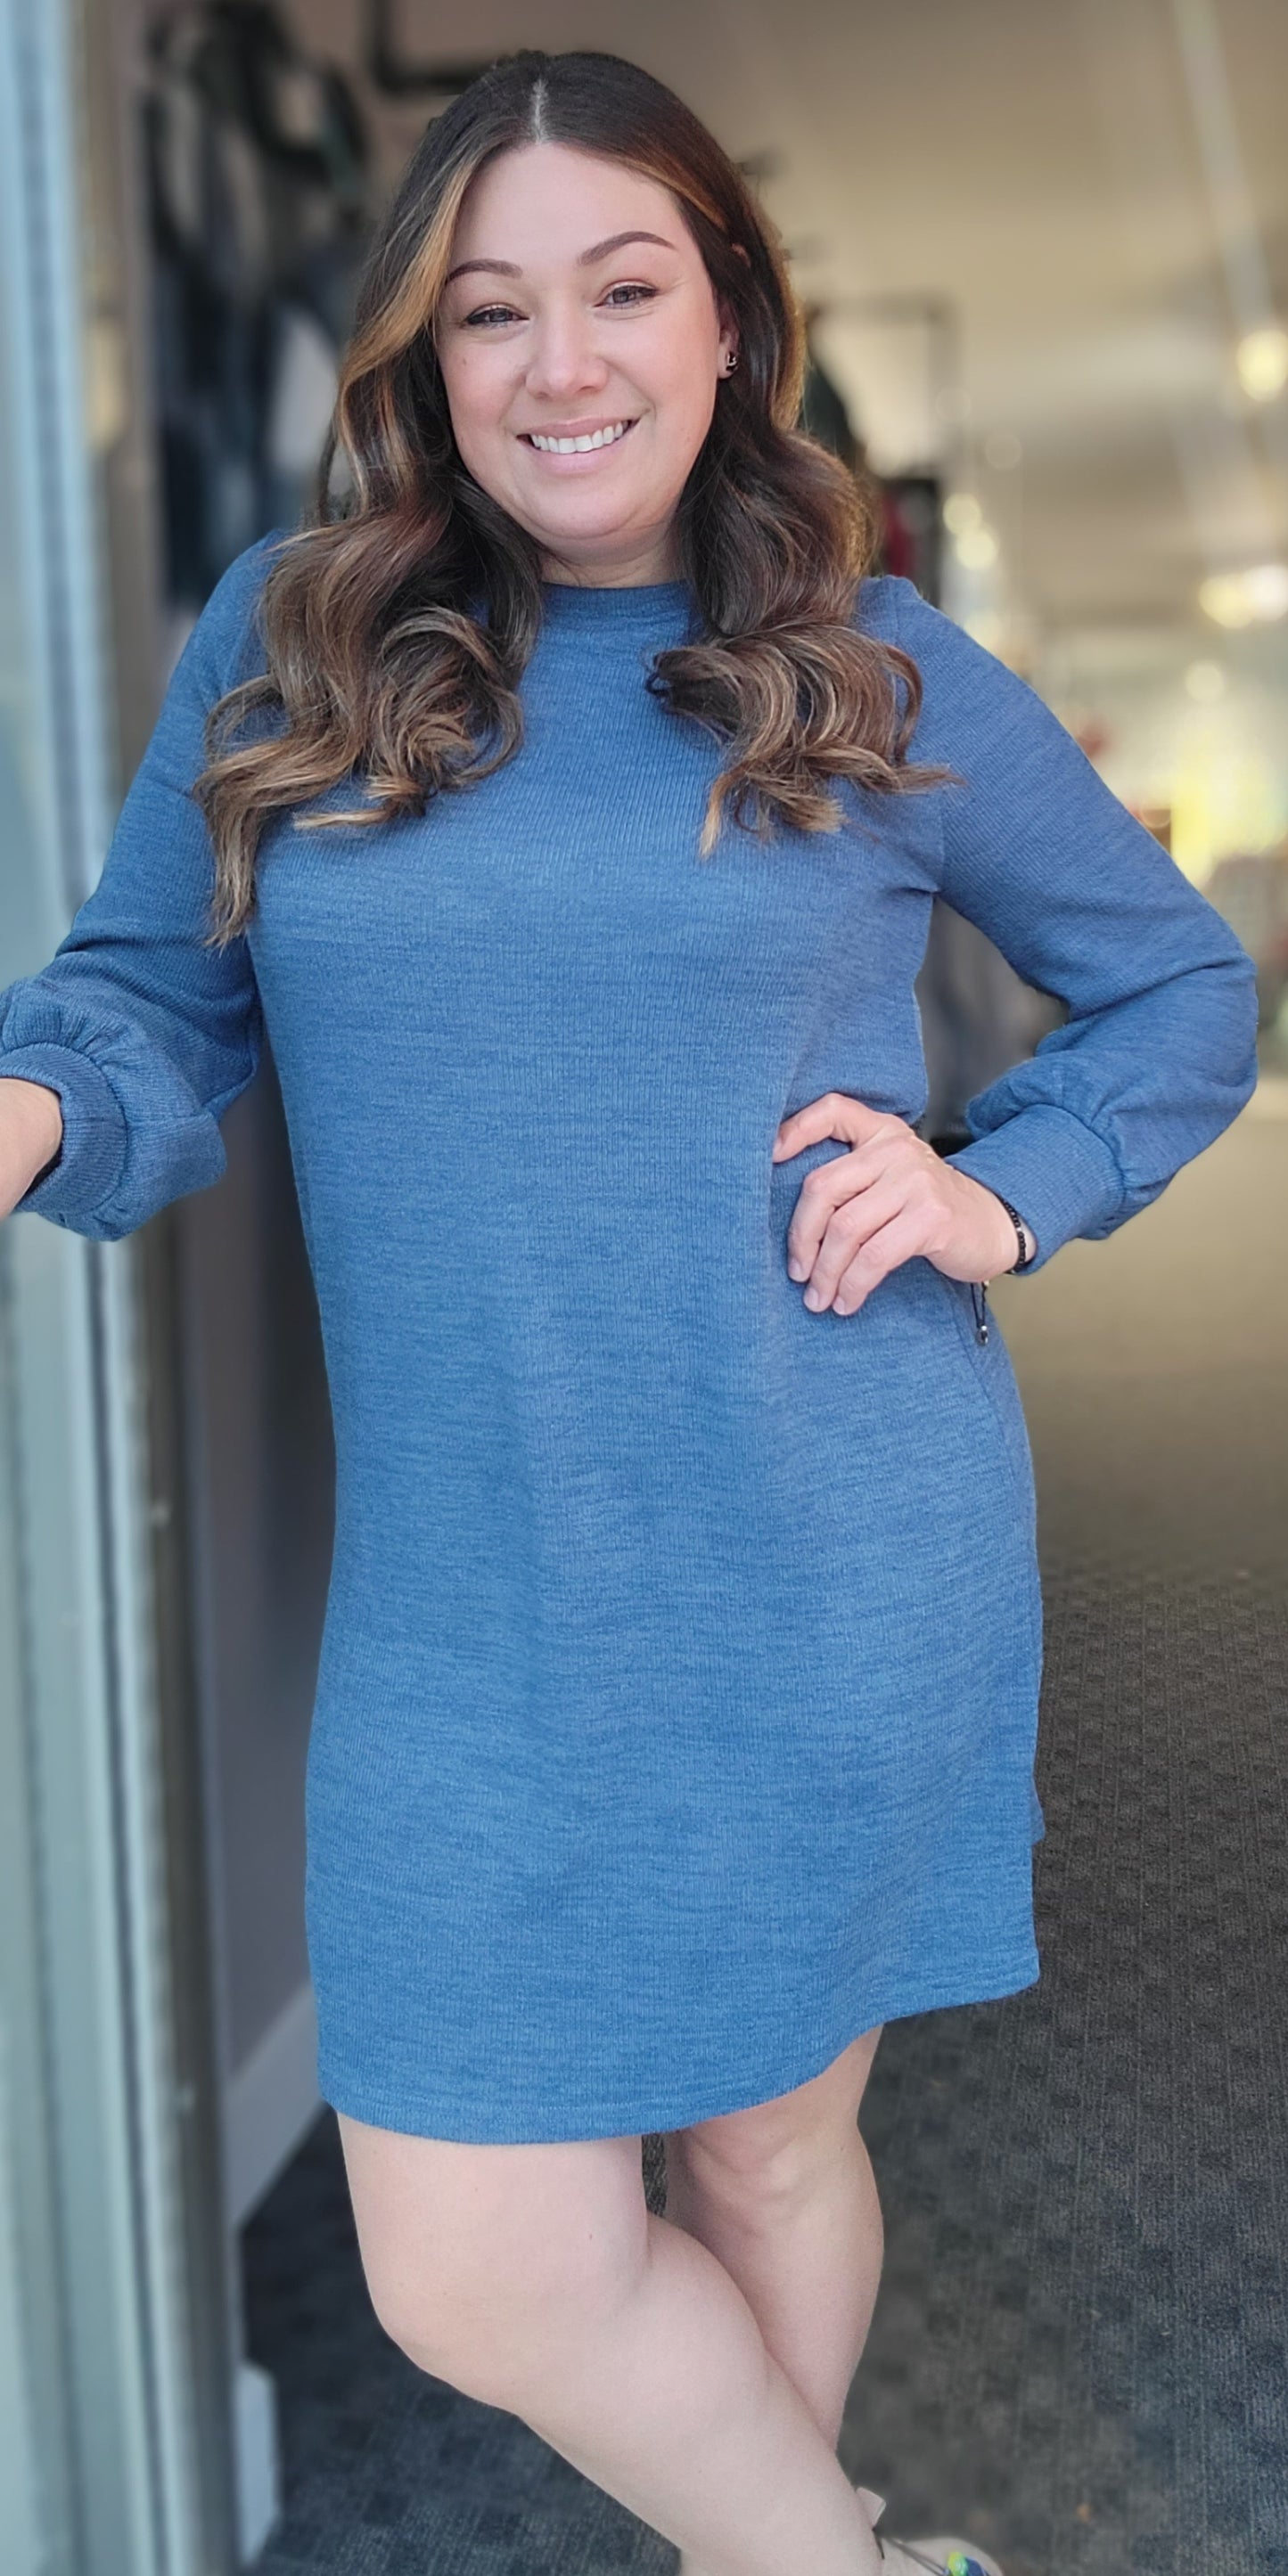 Teal Blue Sweater Dress